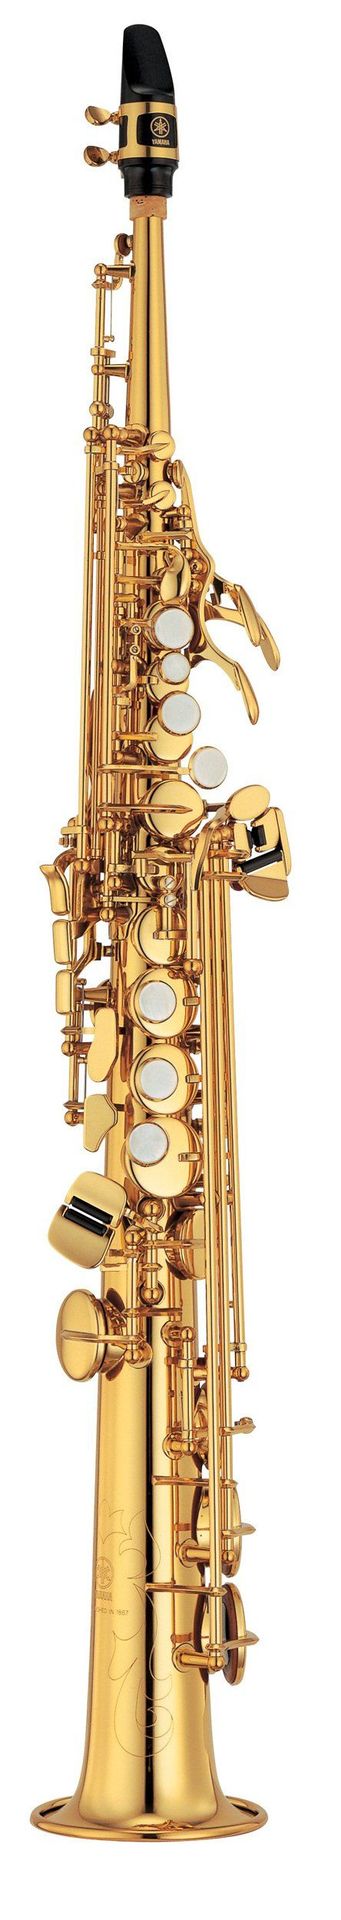 Yamaha YSS 475 II B Sopransaxophon, incl. Etui u. Zubehör  - Onlineshop Musikhaus Markstein